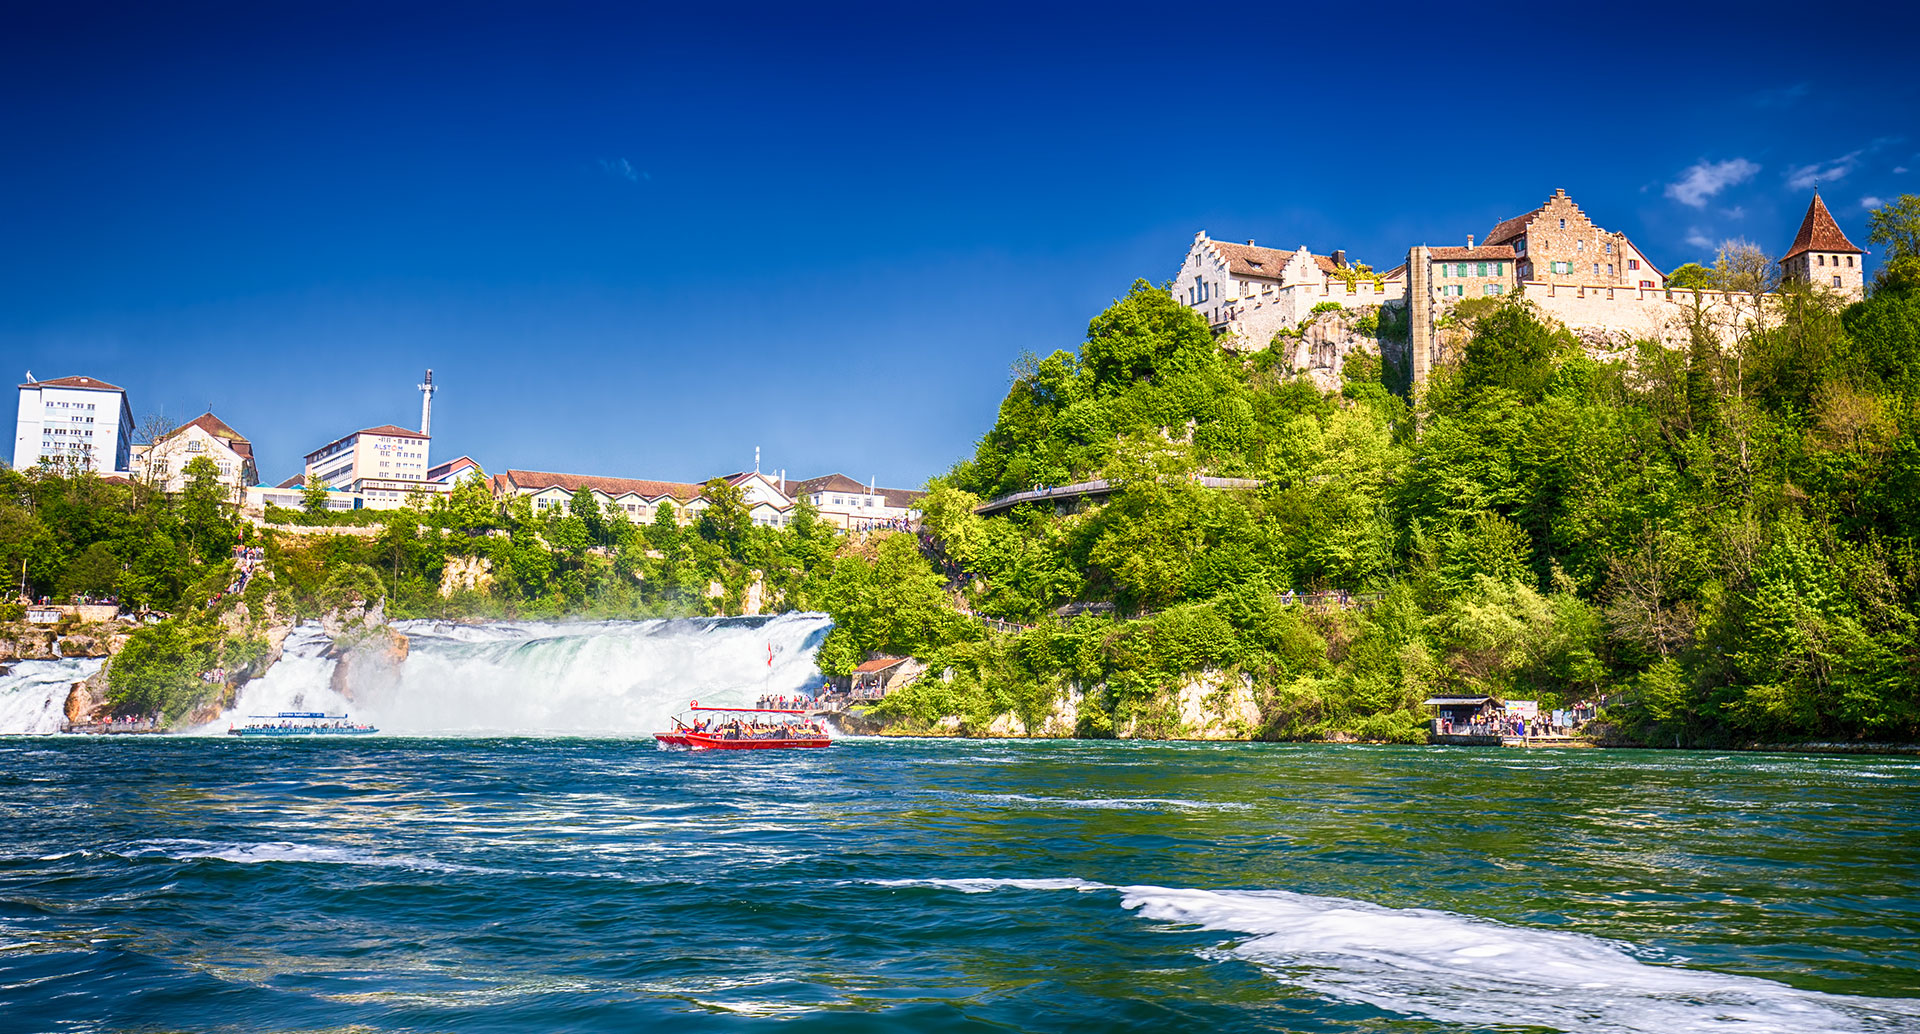 Boat-trip-on-the-Rhine-Falls-in-Switzerland